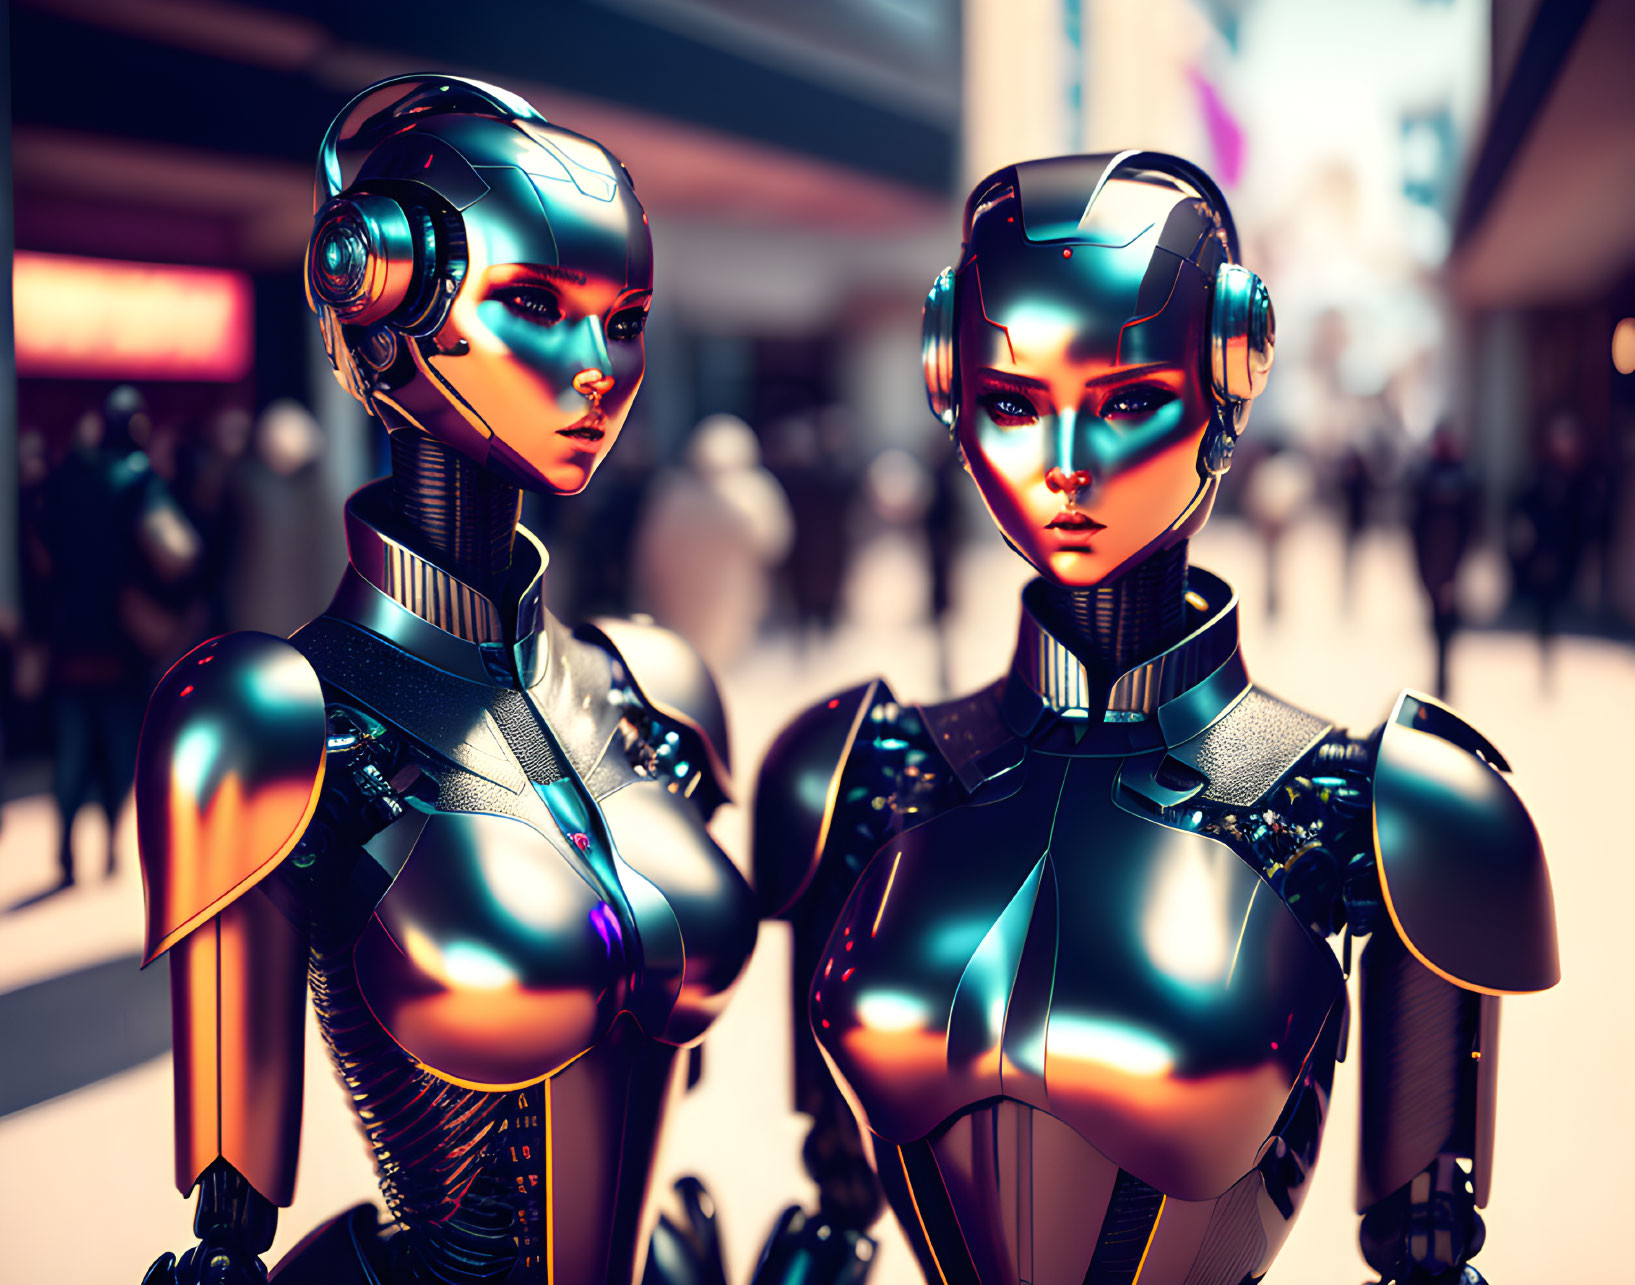 Detailed Female Humanoid Robots Among Softly Focused Crowd